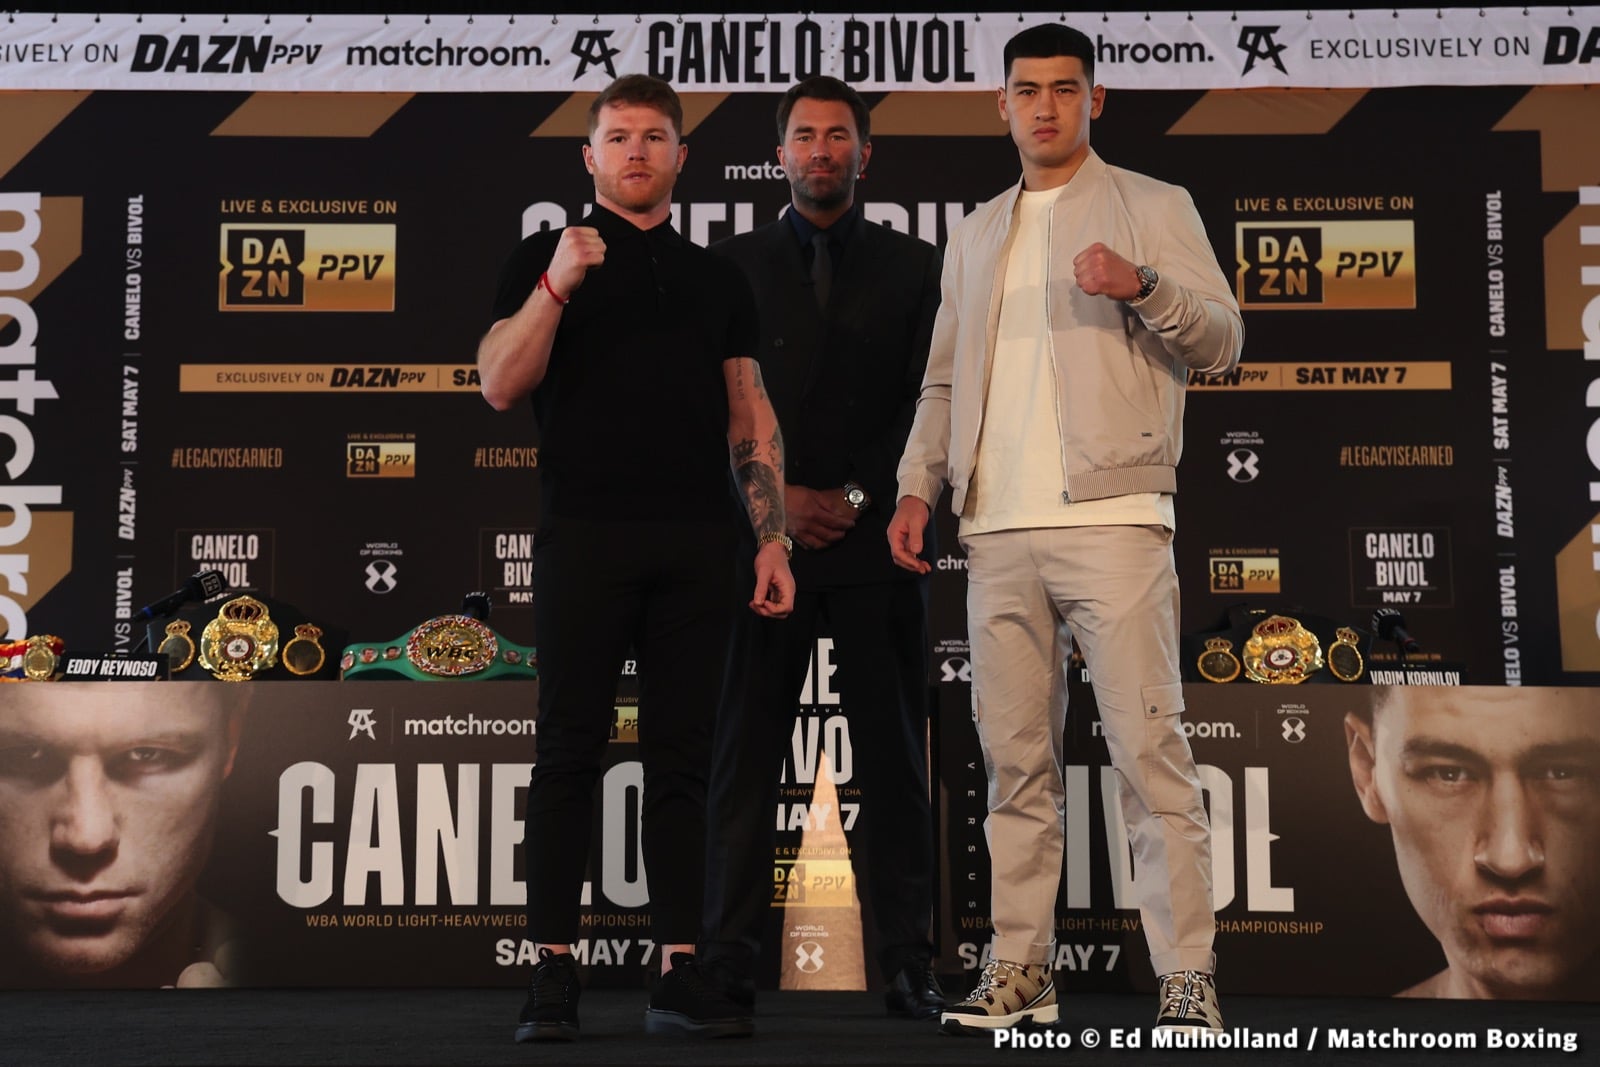 Canelo Alvarez, Dmitry Bivol boxing image / photo